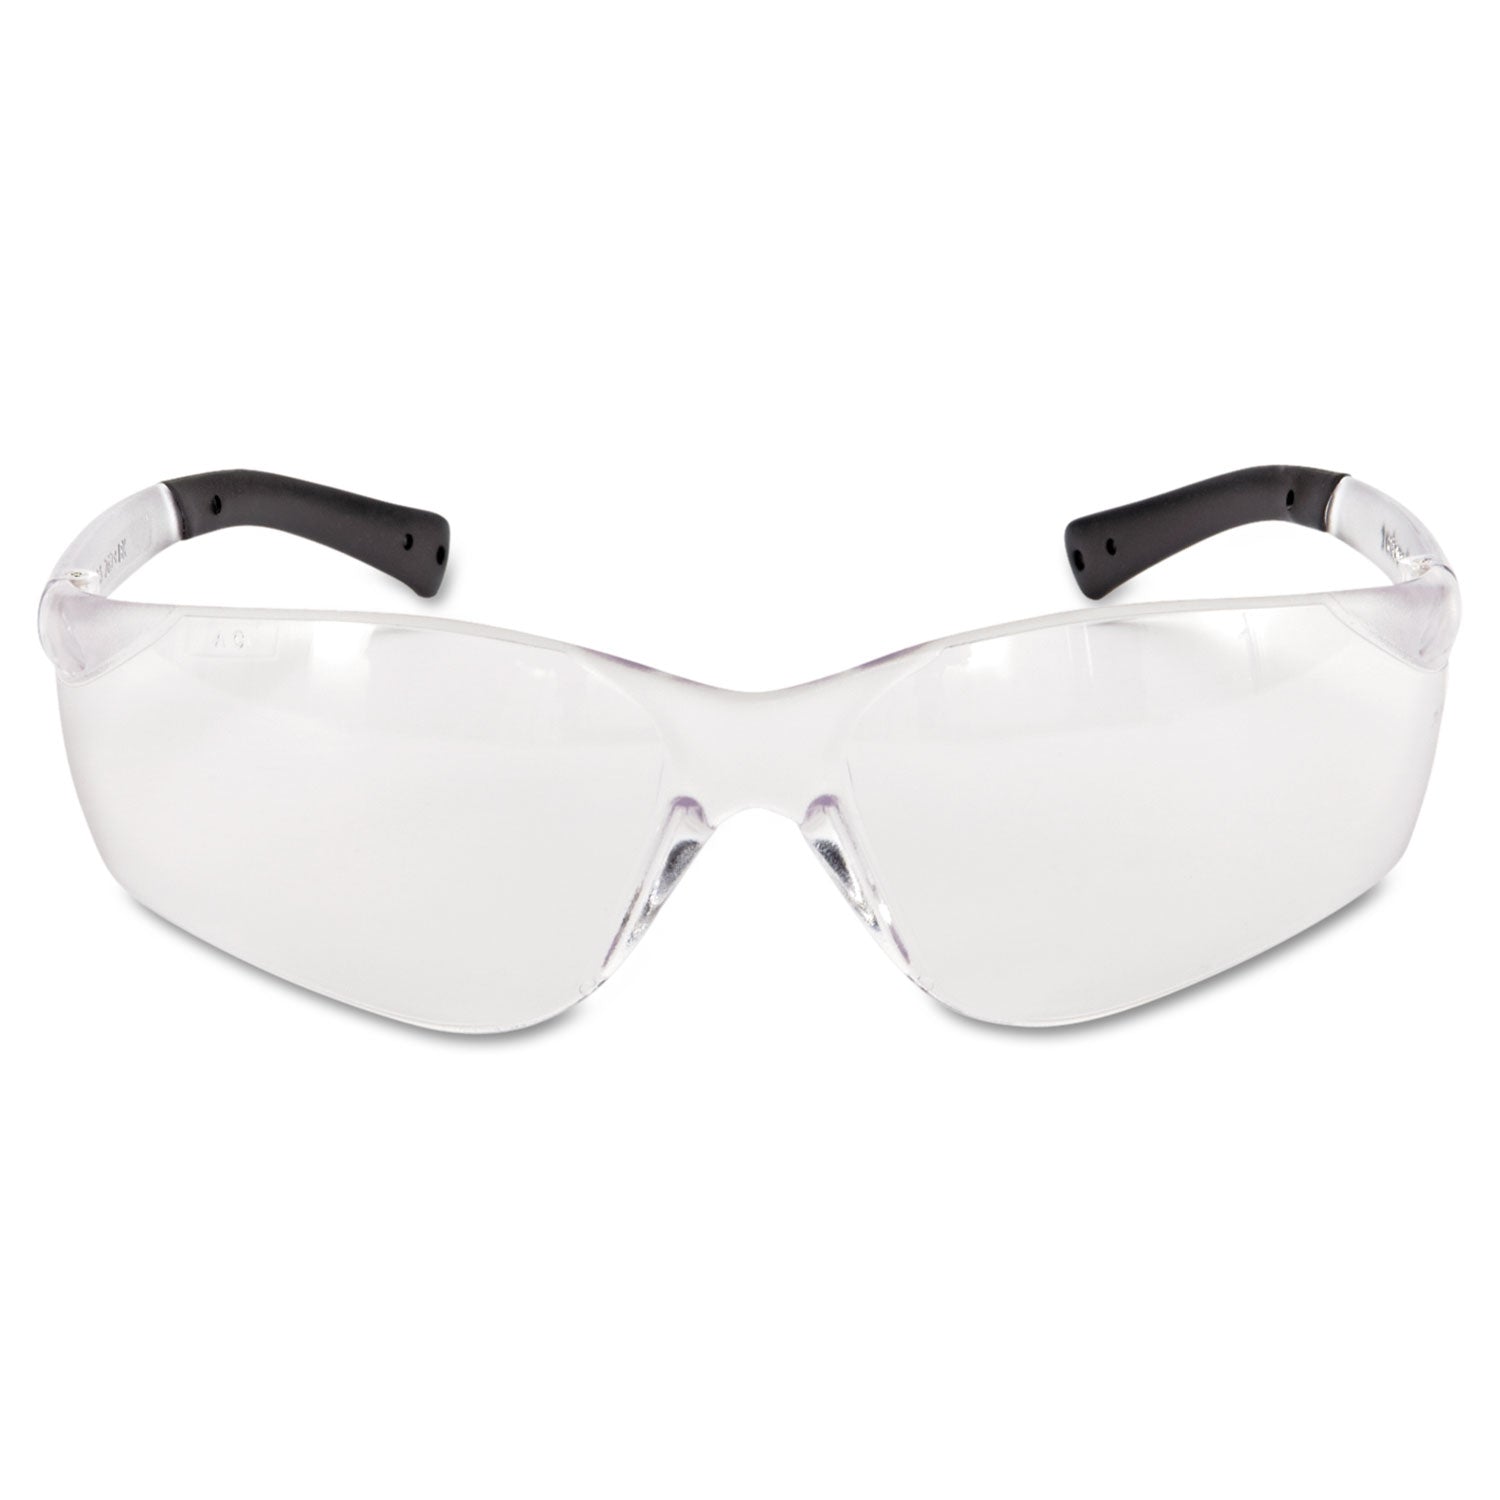 BearKat Safety Glasses, Frost Frame, Clear Lens, 12/Box - 